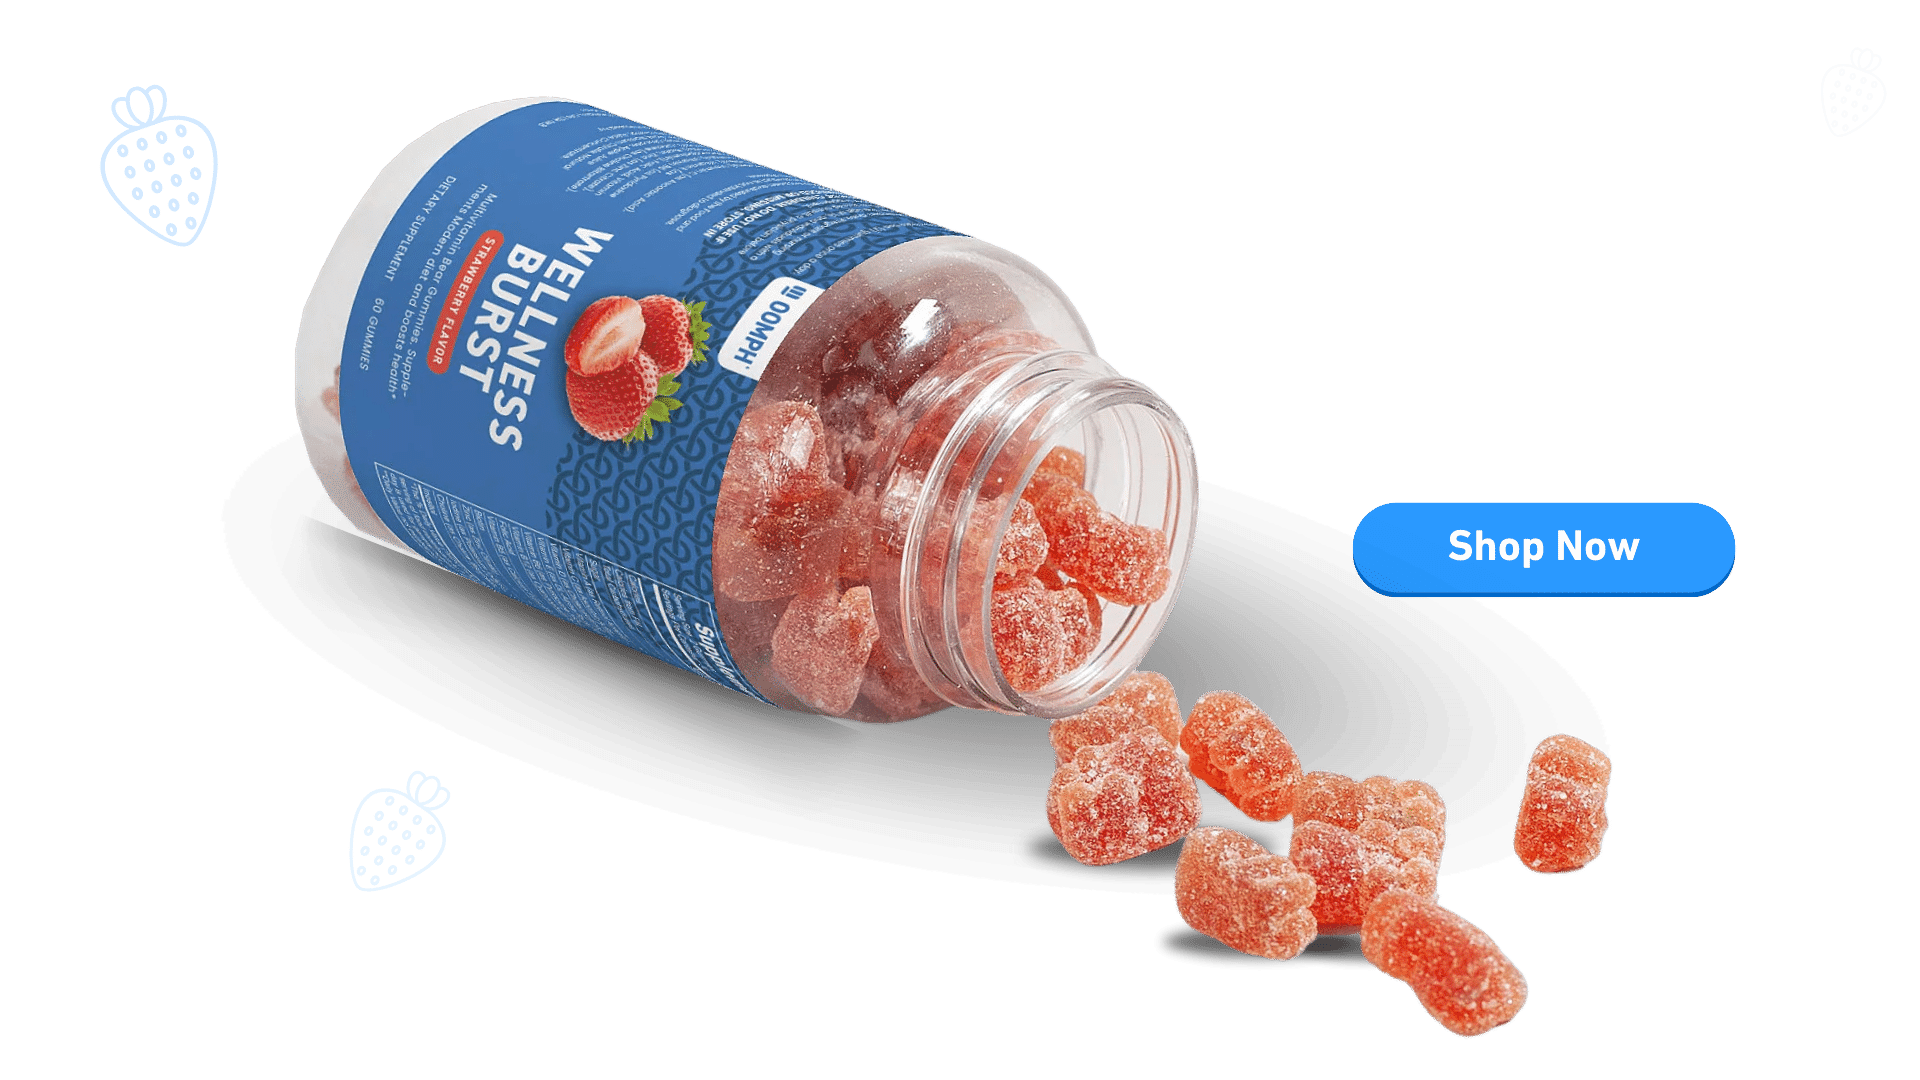 Oomph Fitness Multivitamin Gummy Wellness Burst Strawberry Flavor for Optimal Health